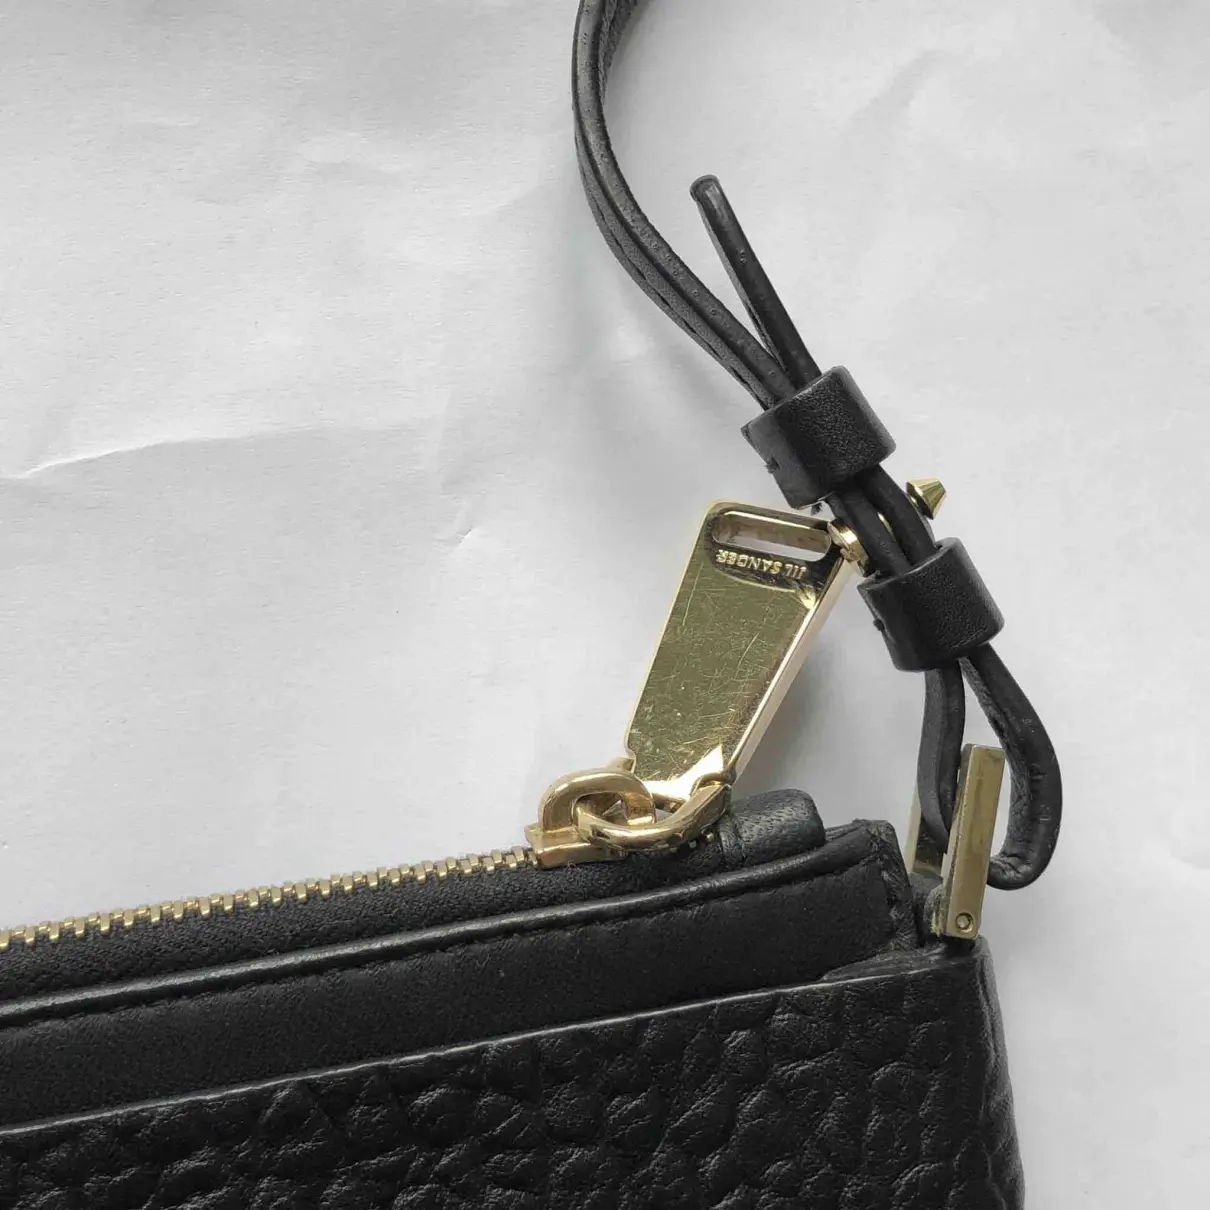 Leather handbag Jil Sander